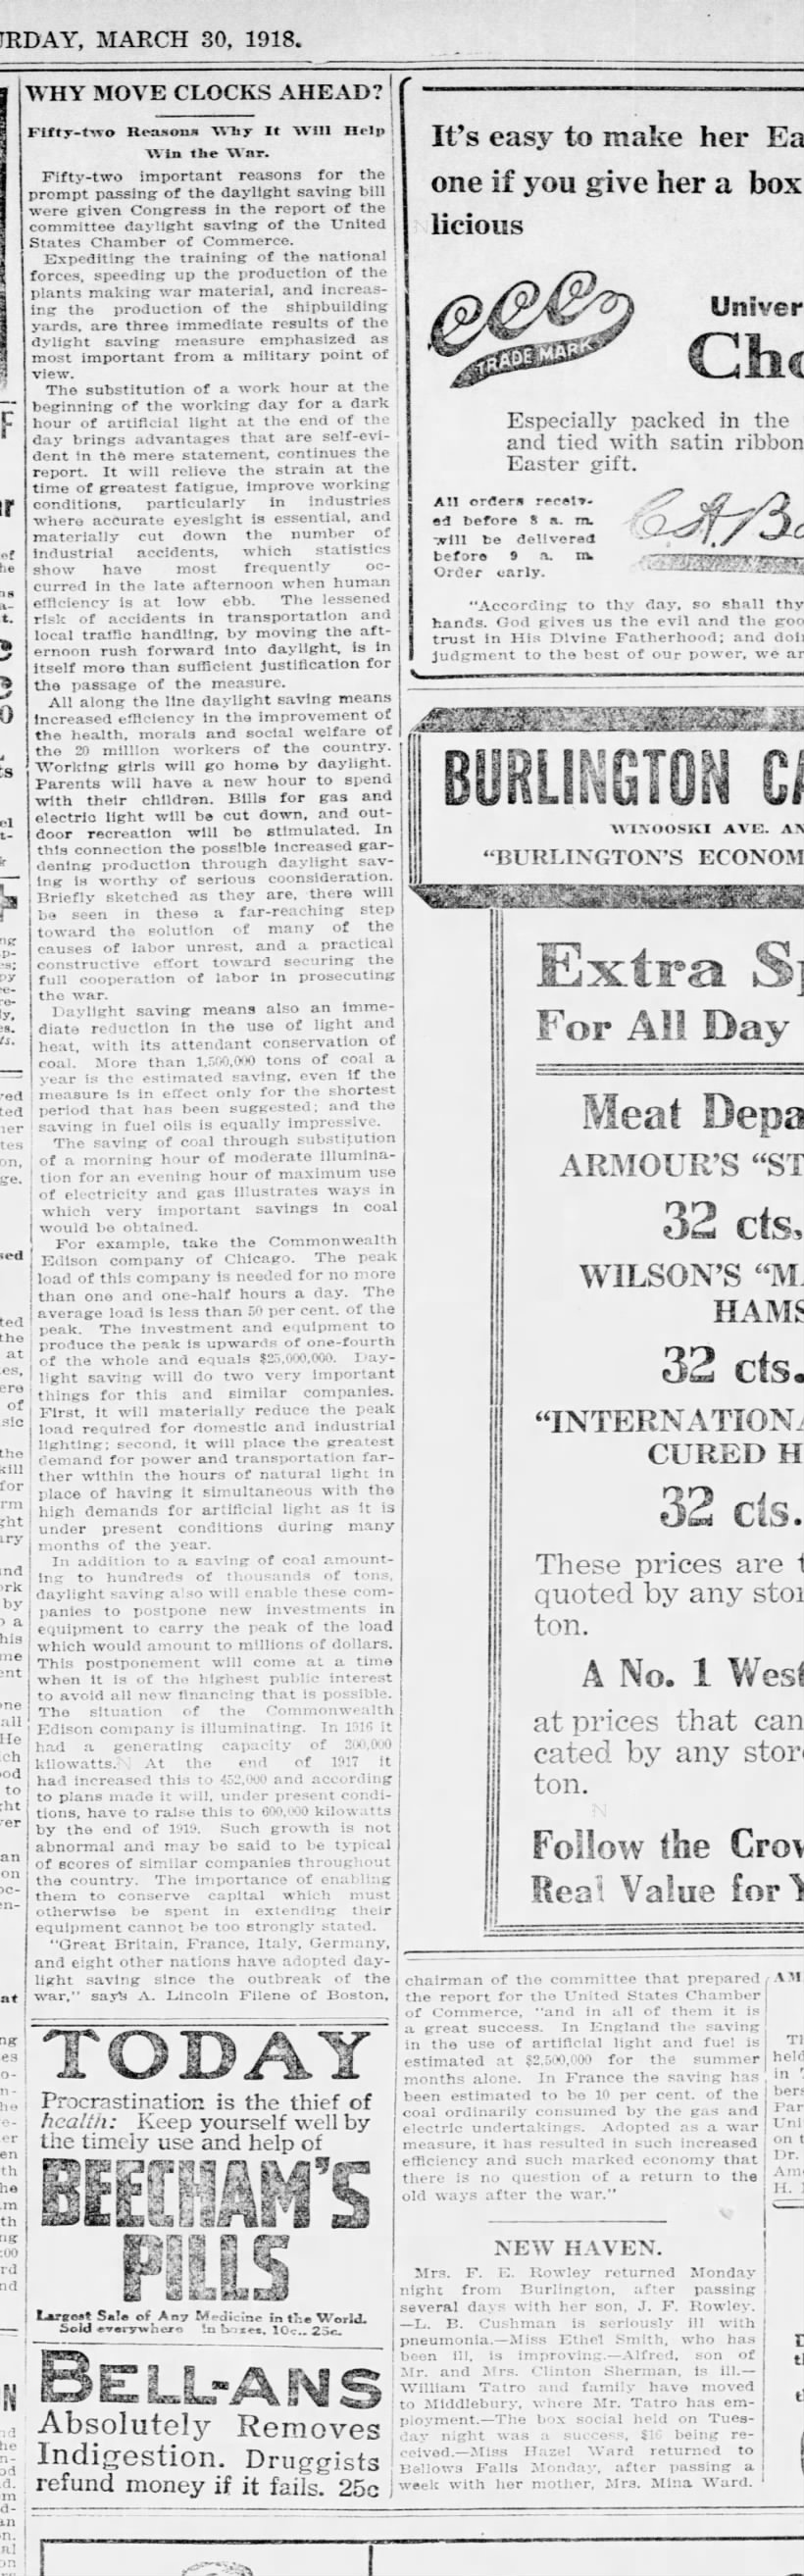 52 Reasons daylight saving time will help win the war (1918)